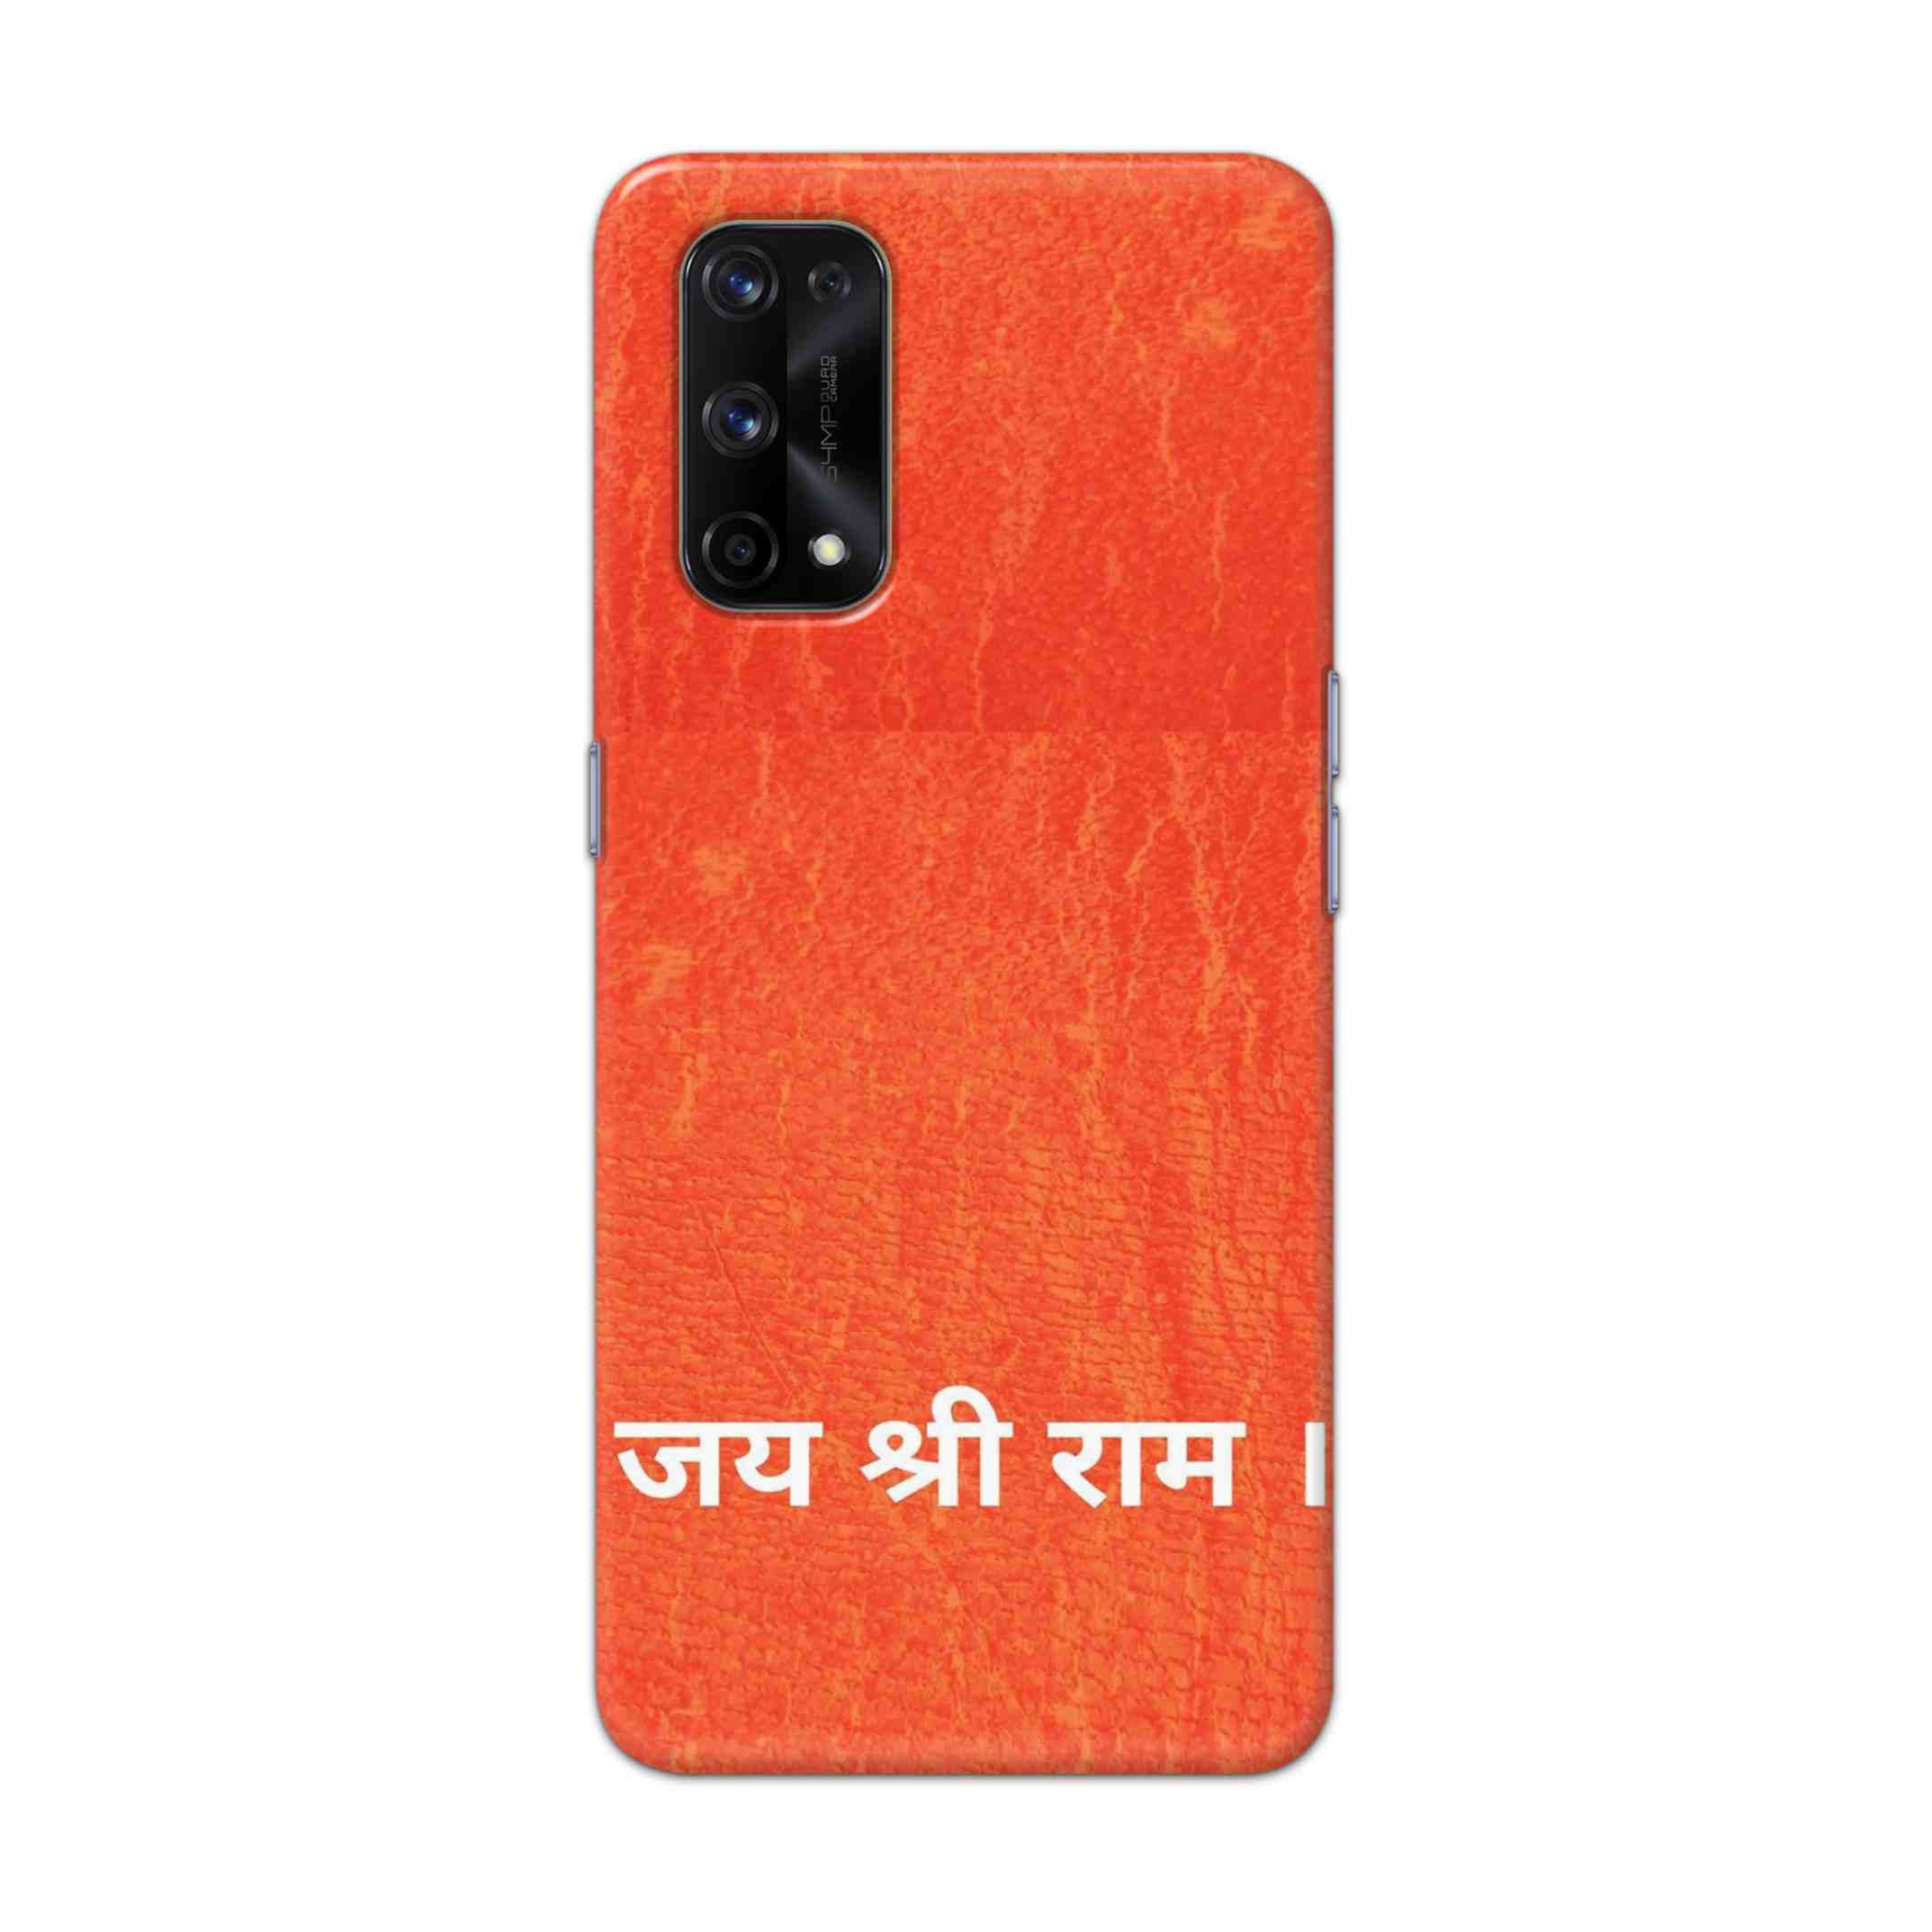 Buy Jai Shree Ram Hard Back Mobile Phone Case Cover For Realme X7 Pro Online